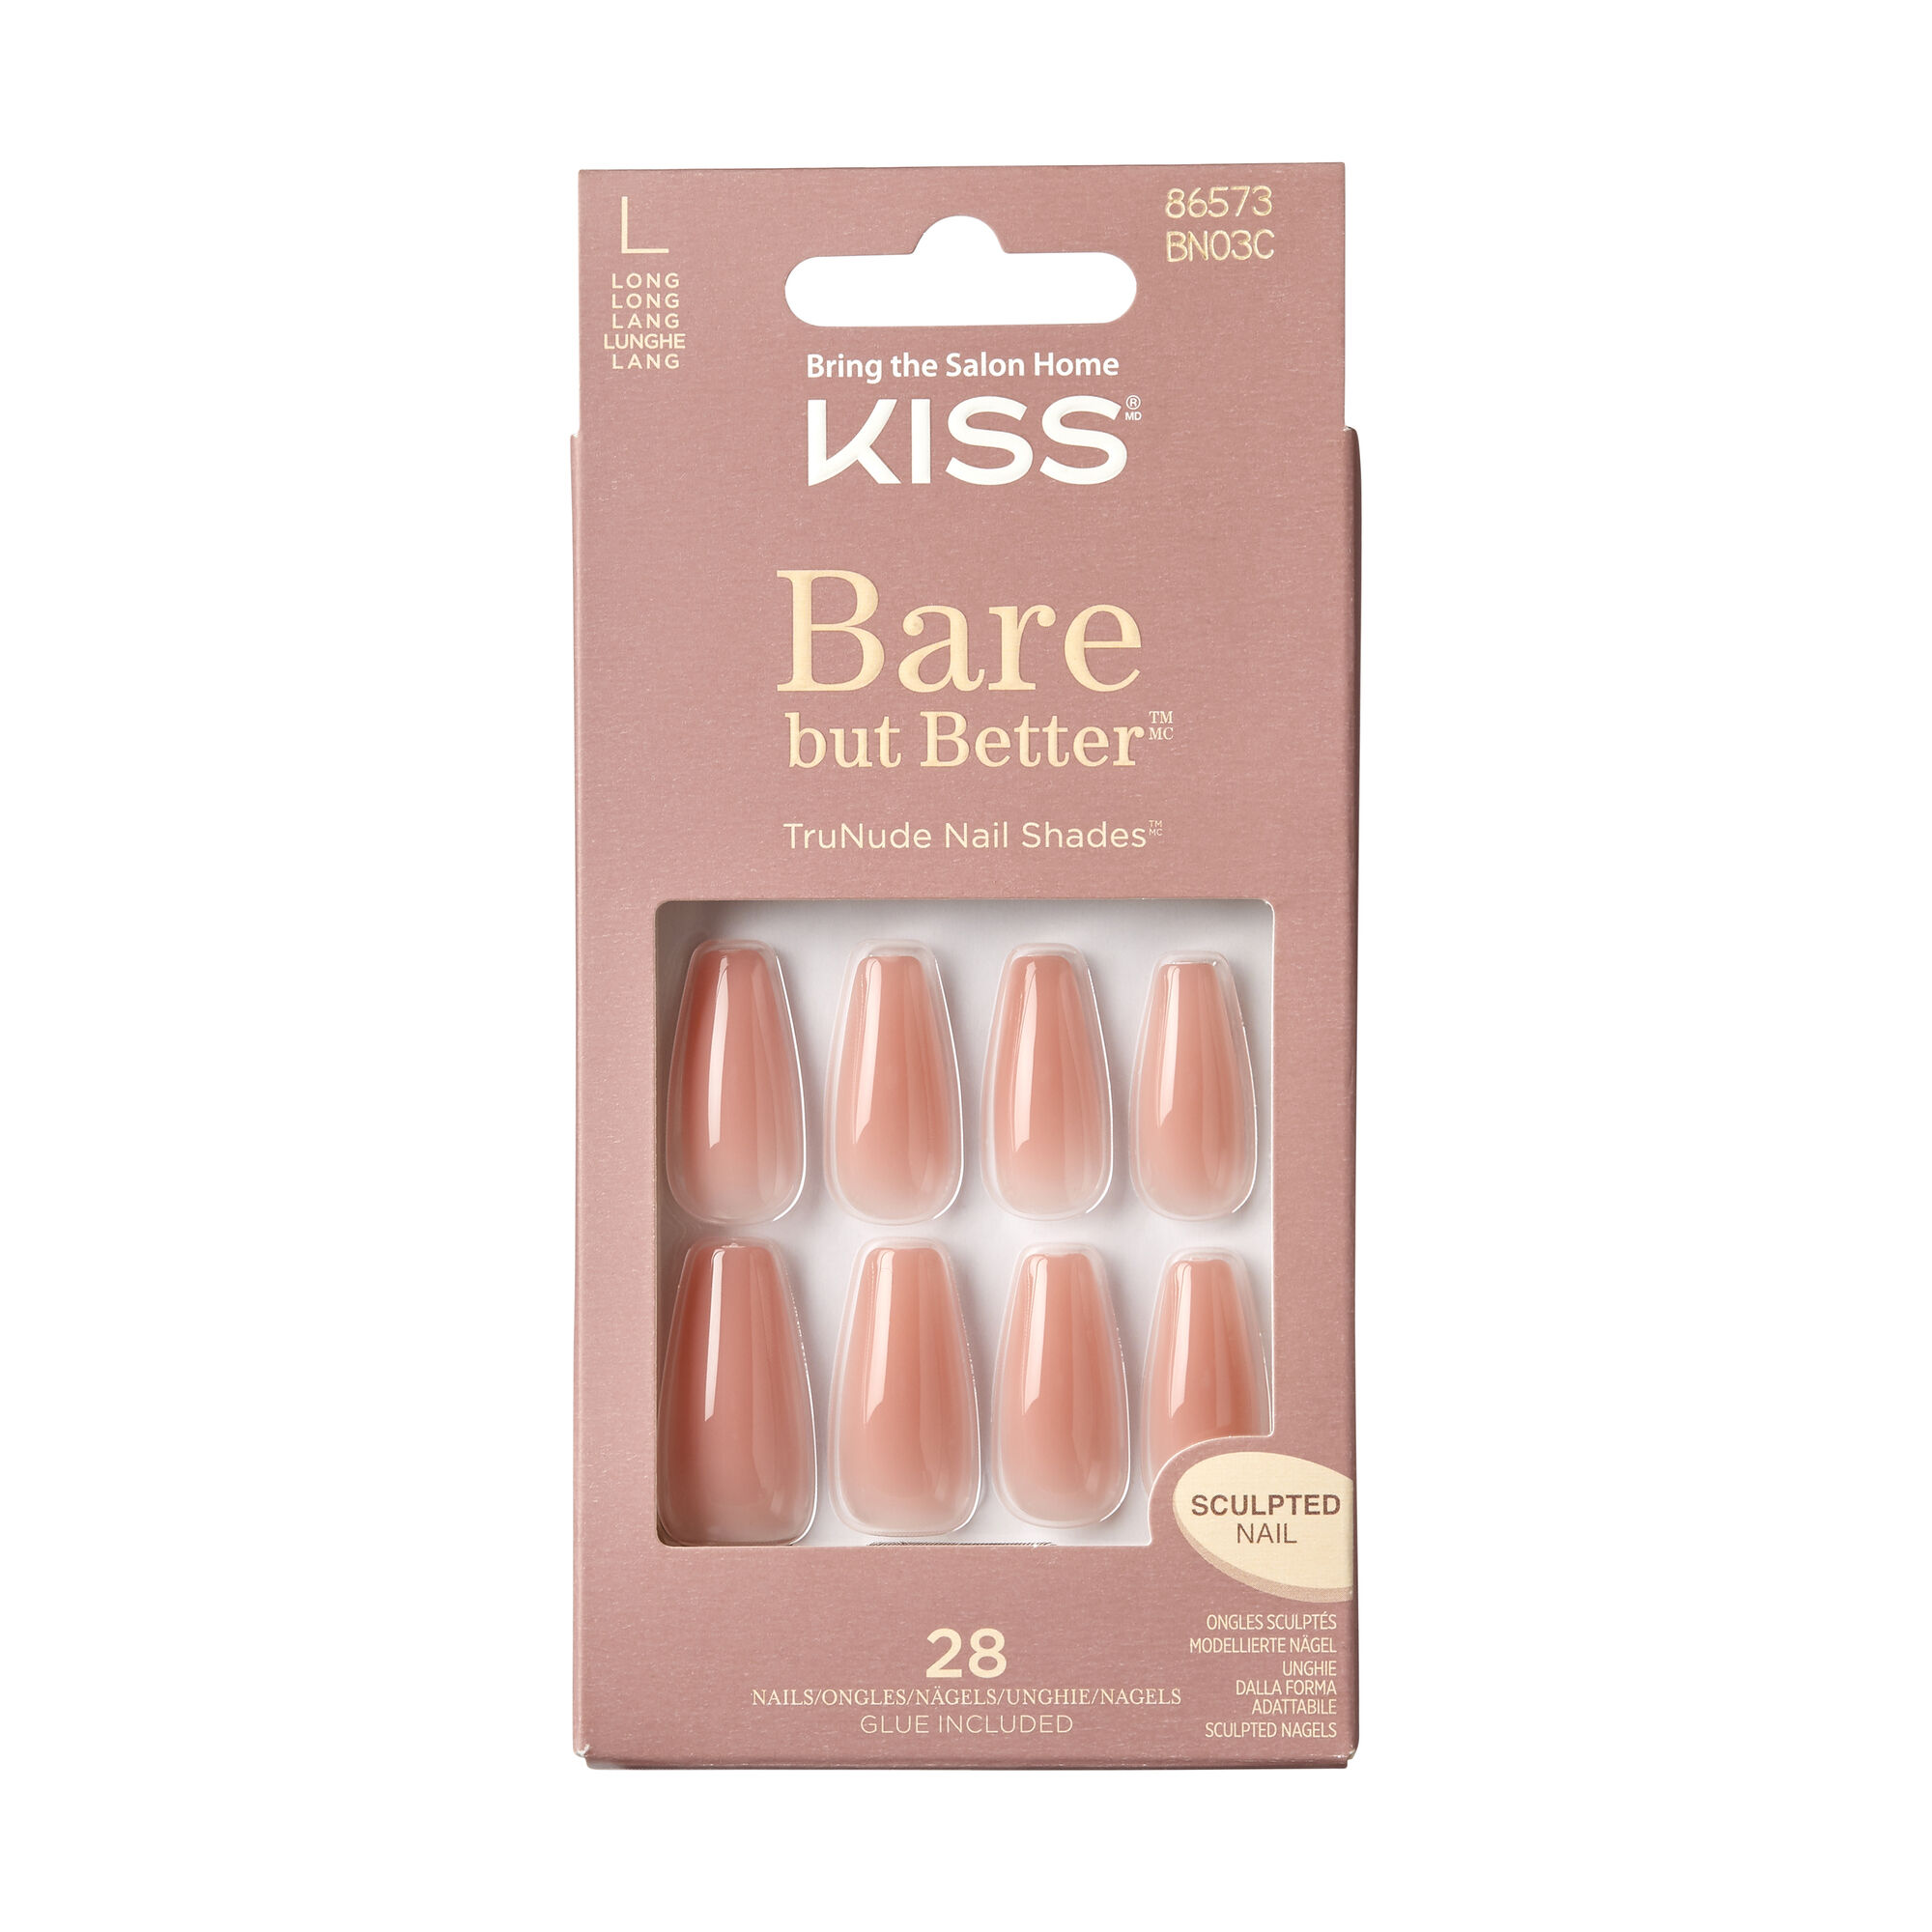 самоклеящиеся ногти kimmawestruck kiss kimm01 1 упаковка Искусственные ногти с нюдовым сиянием Kiss Bare But Better, 1 упаковка